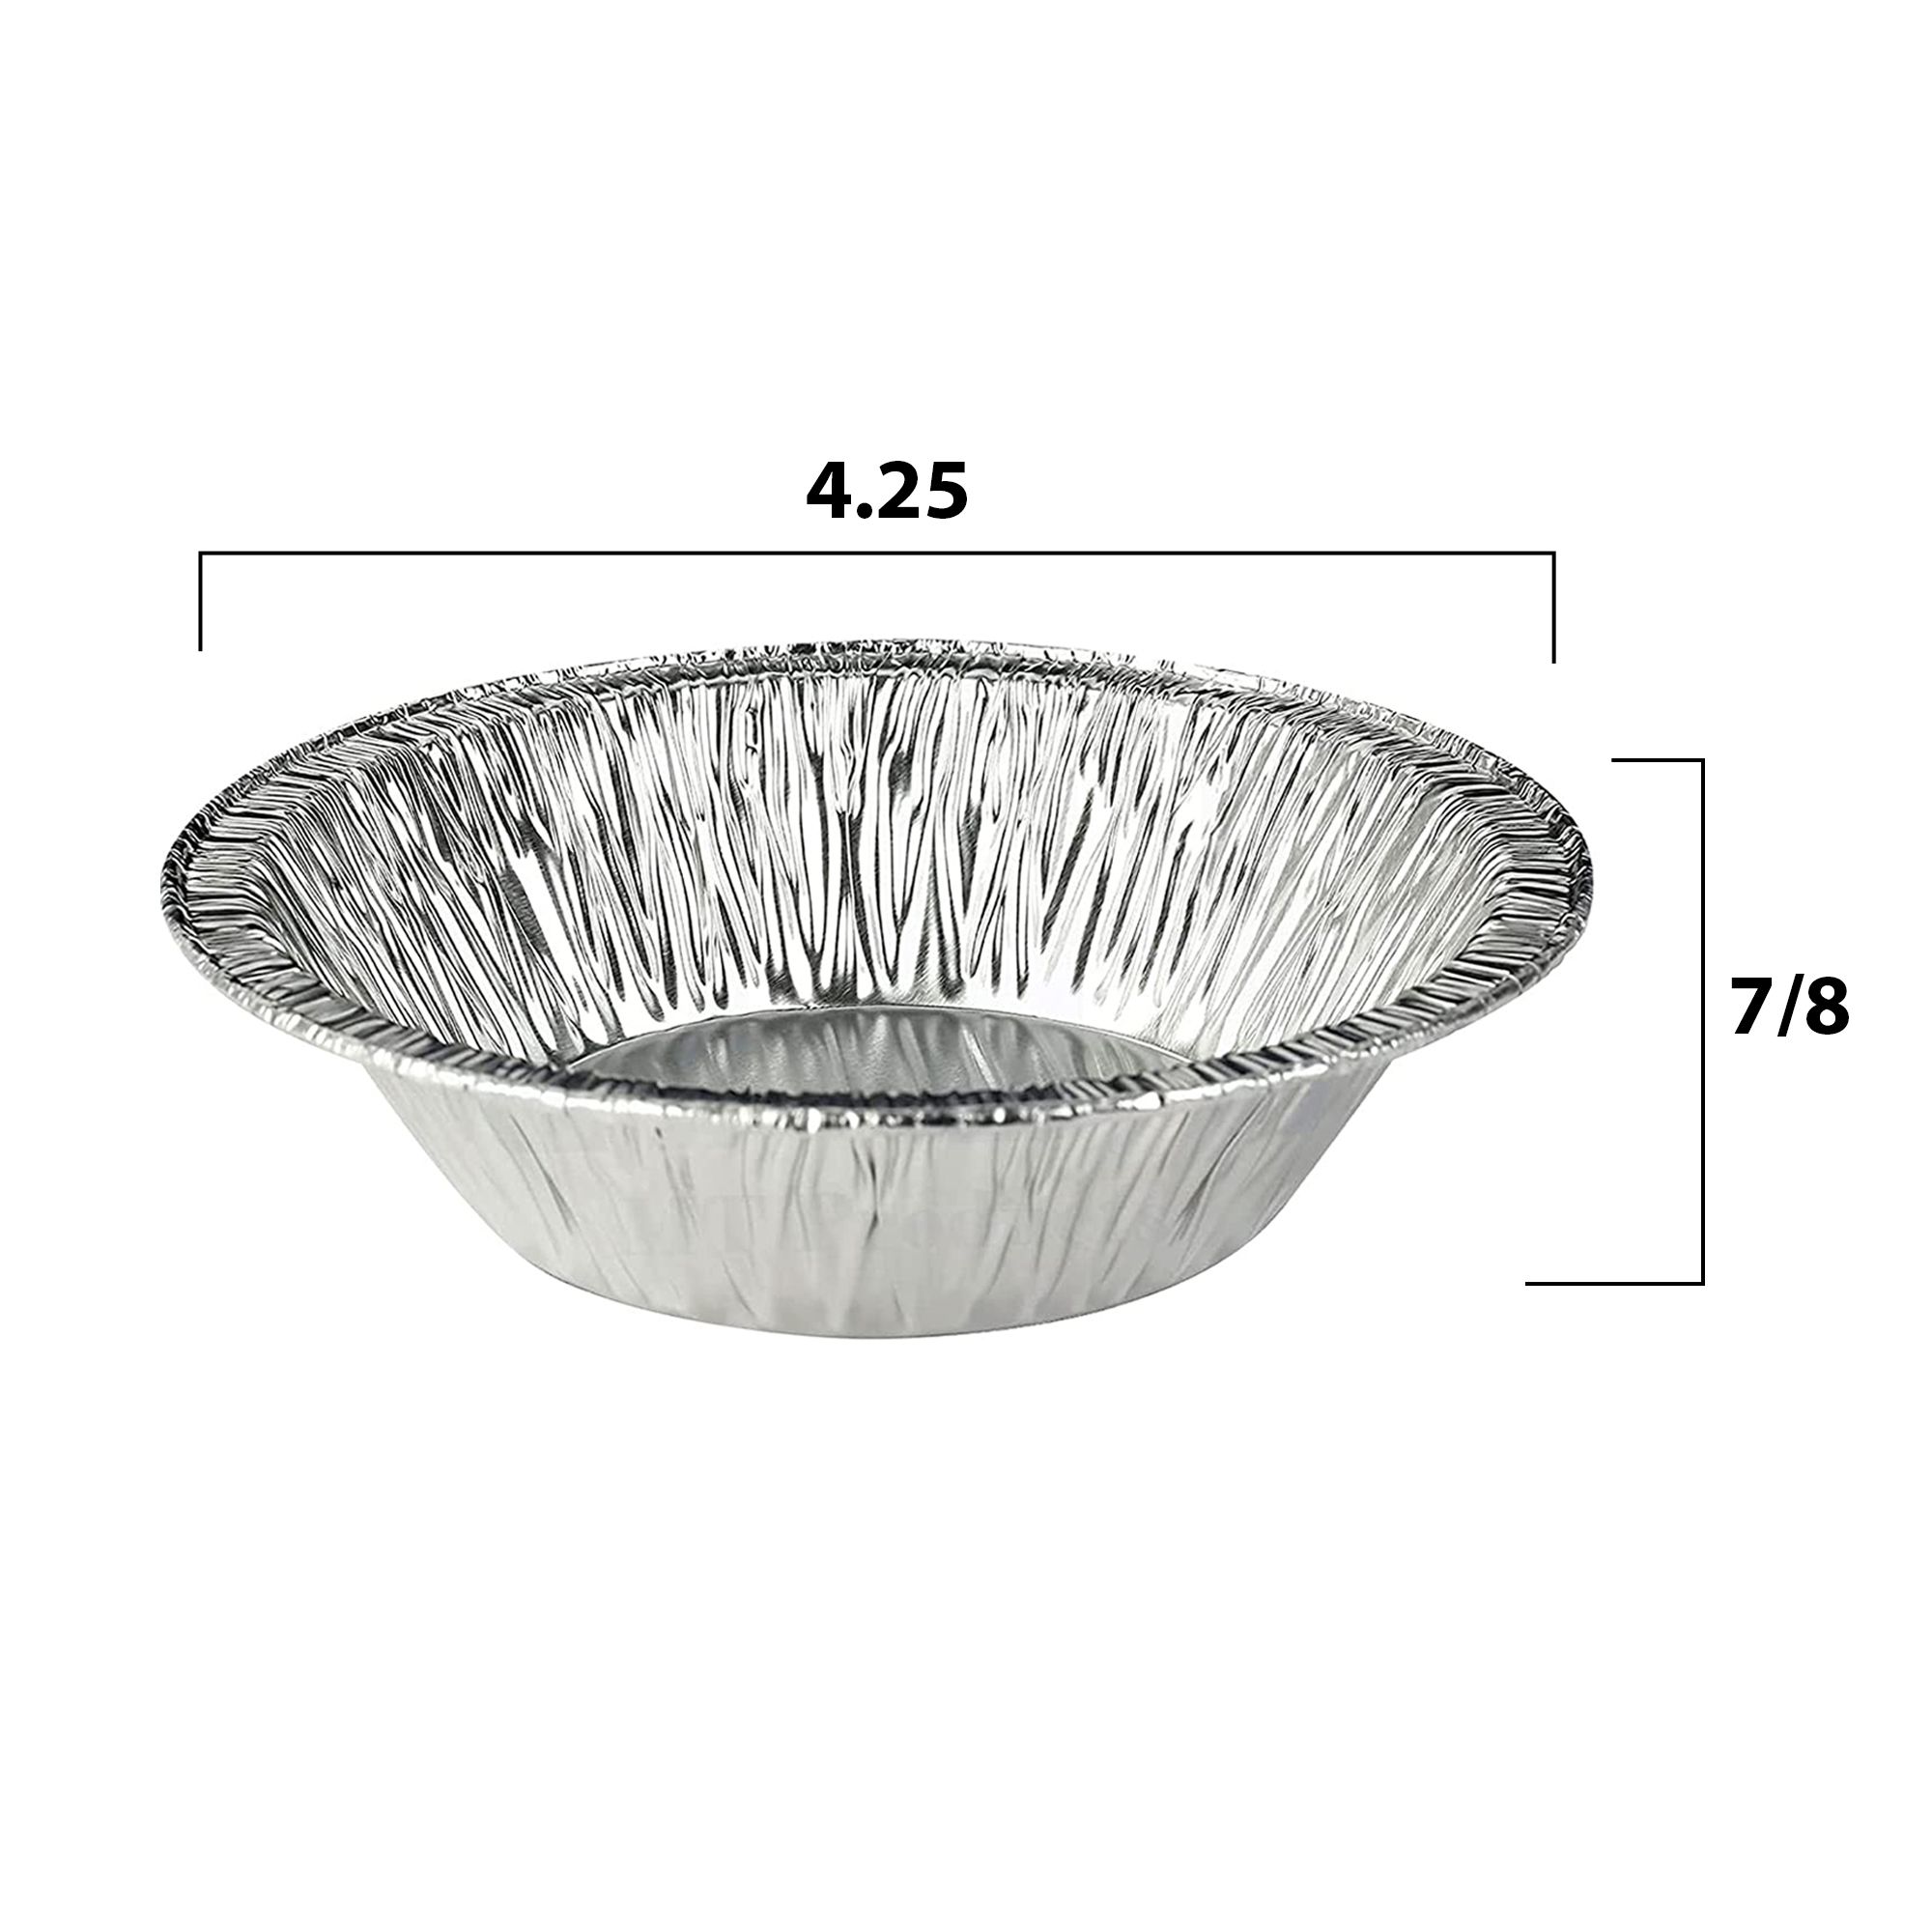 5 inch Mini Pie Pan - Small Disposable Aluminum Foil Mini Pie Tin for Baking, Personal Size